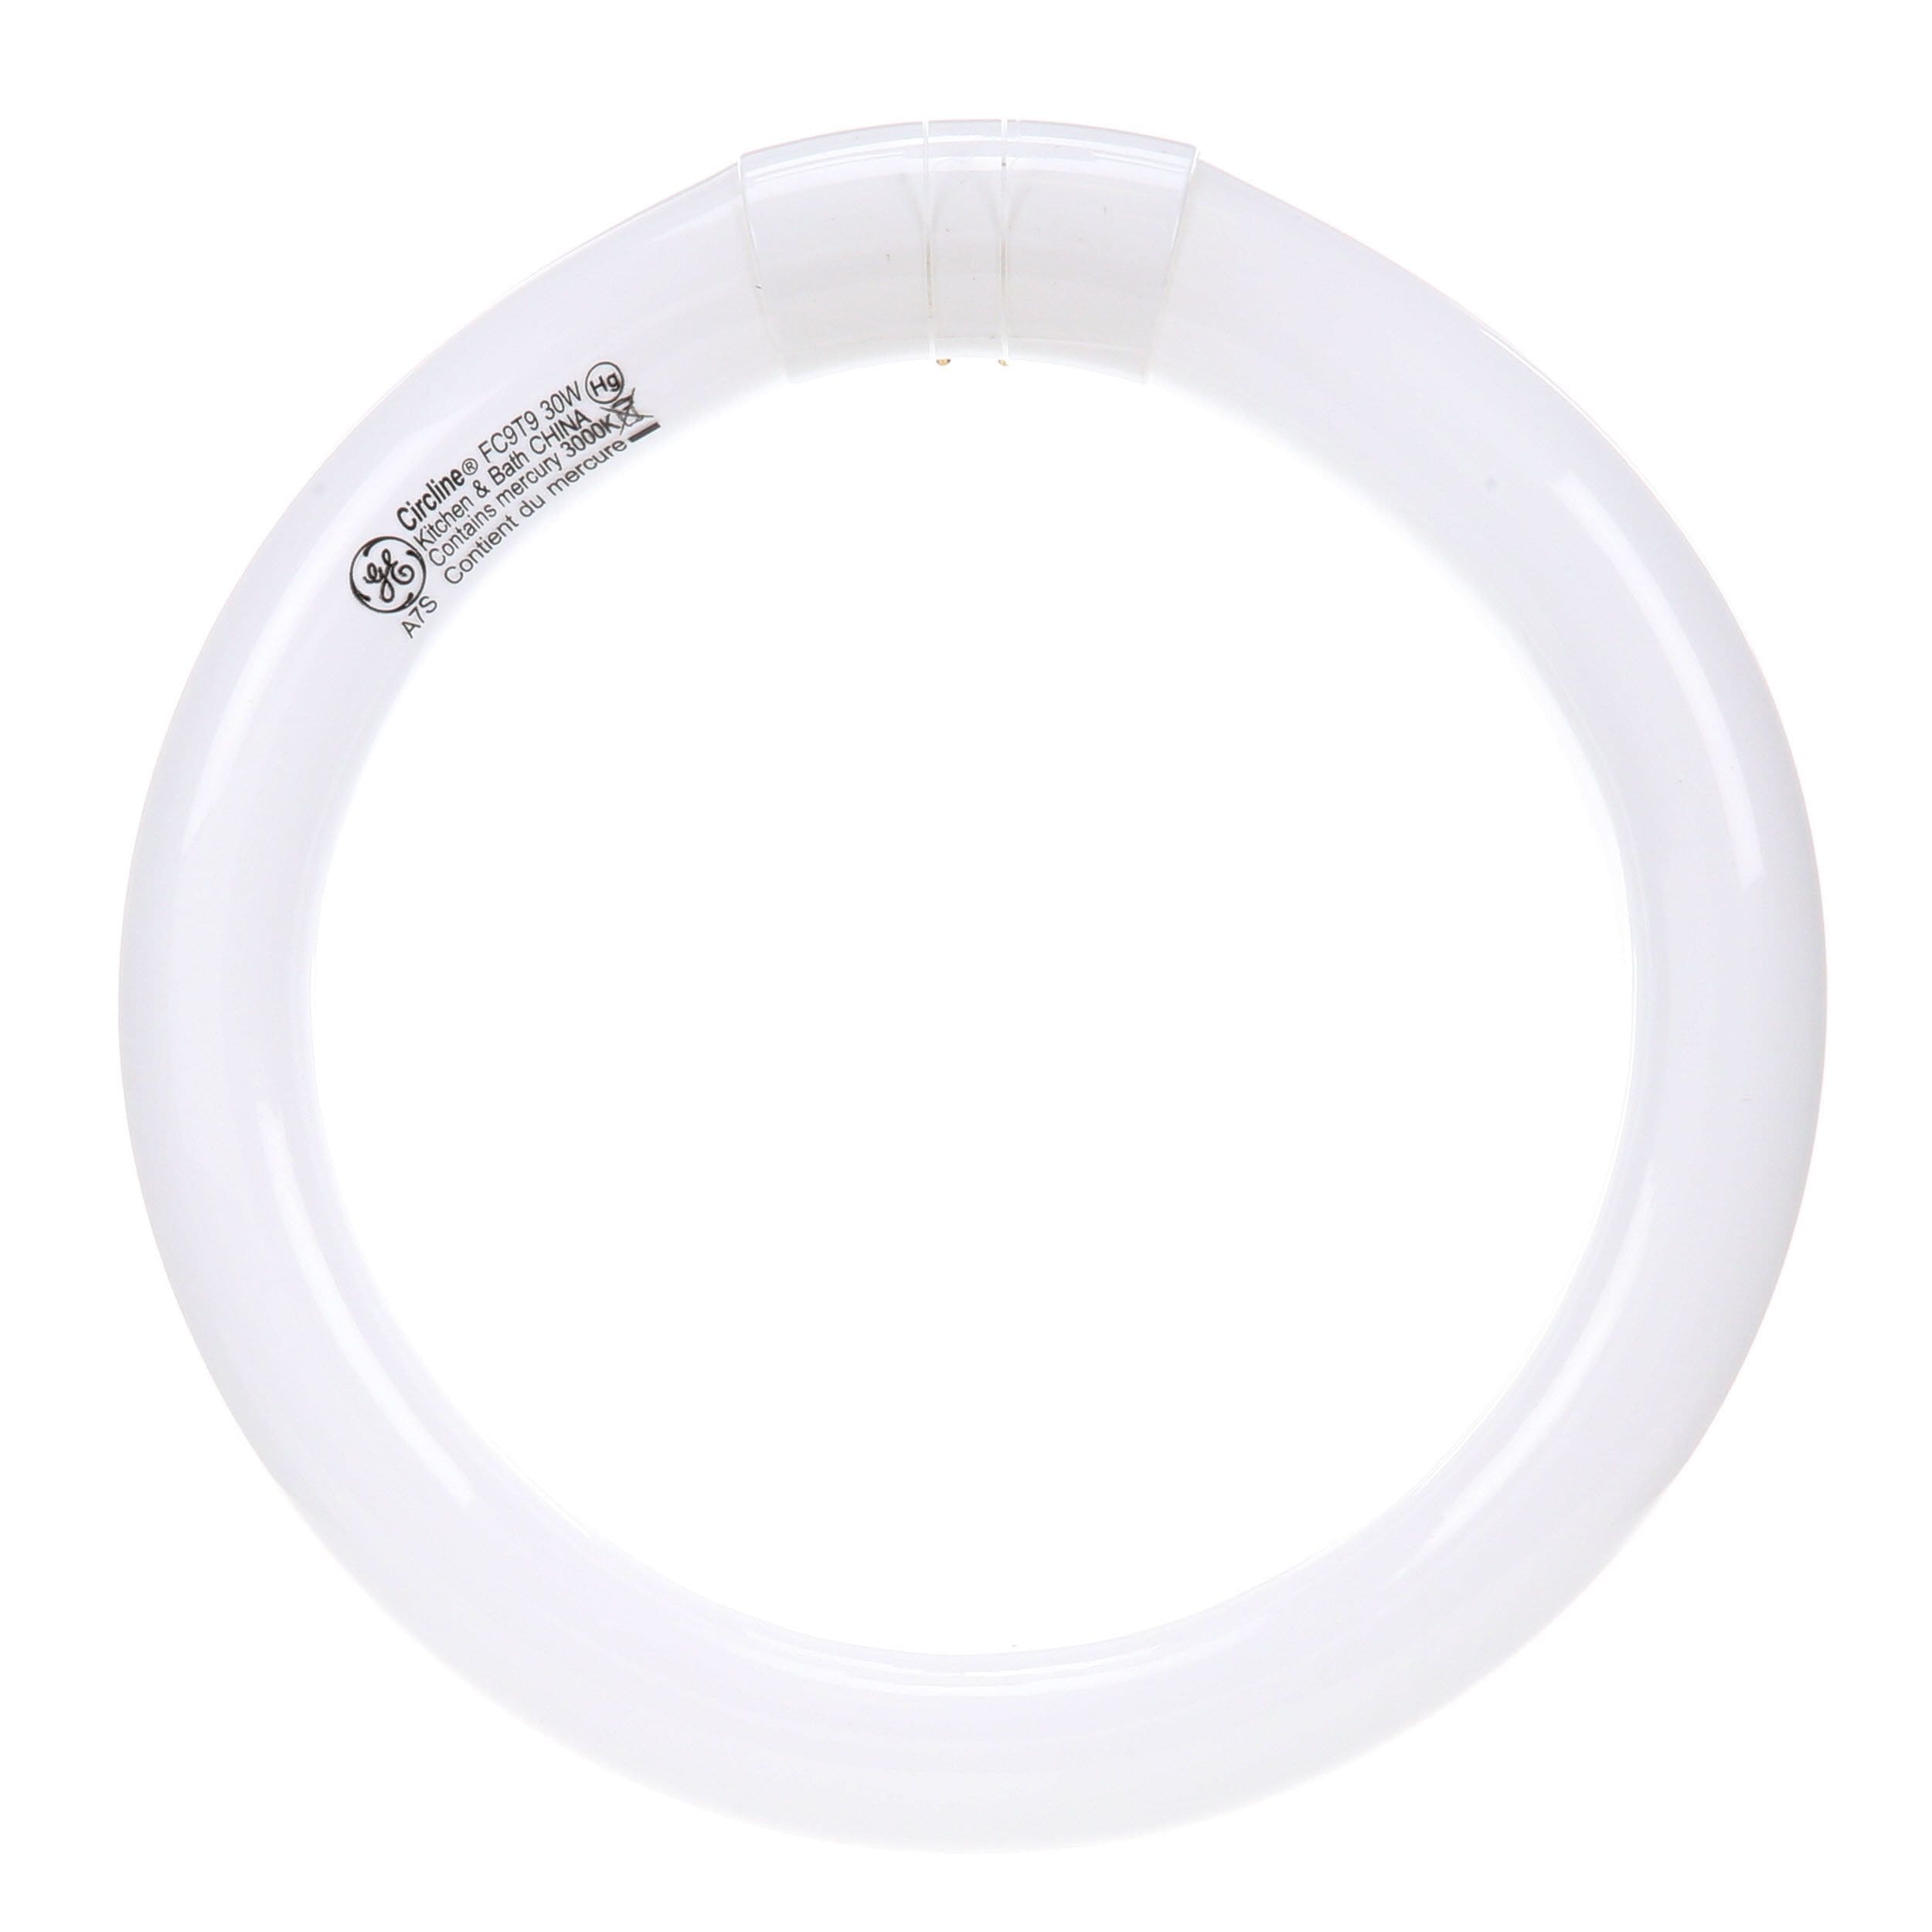 GE Lighting 33893 40-watt 2700-lumen T9 Circuline Fluorescent Lamp Cool White for sale online 